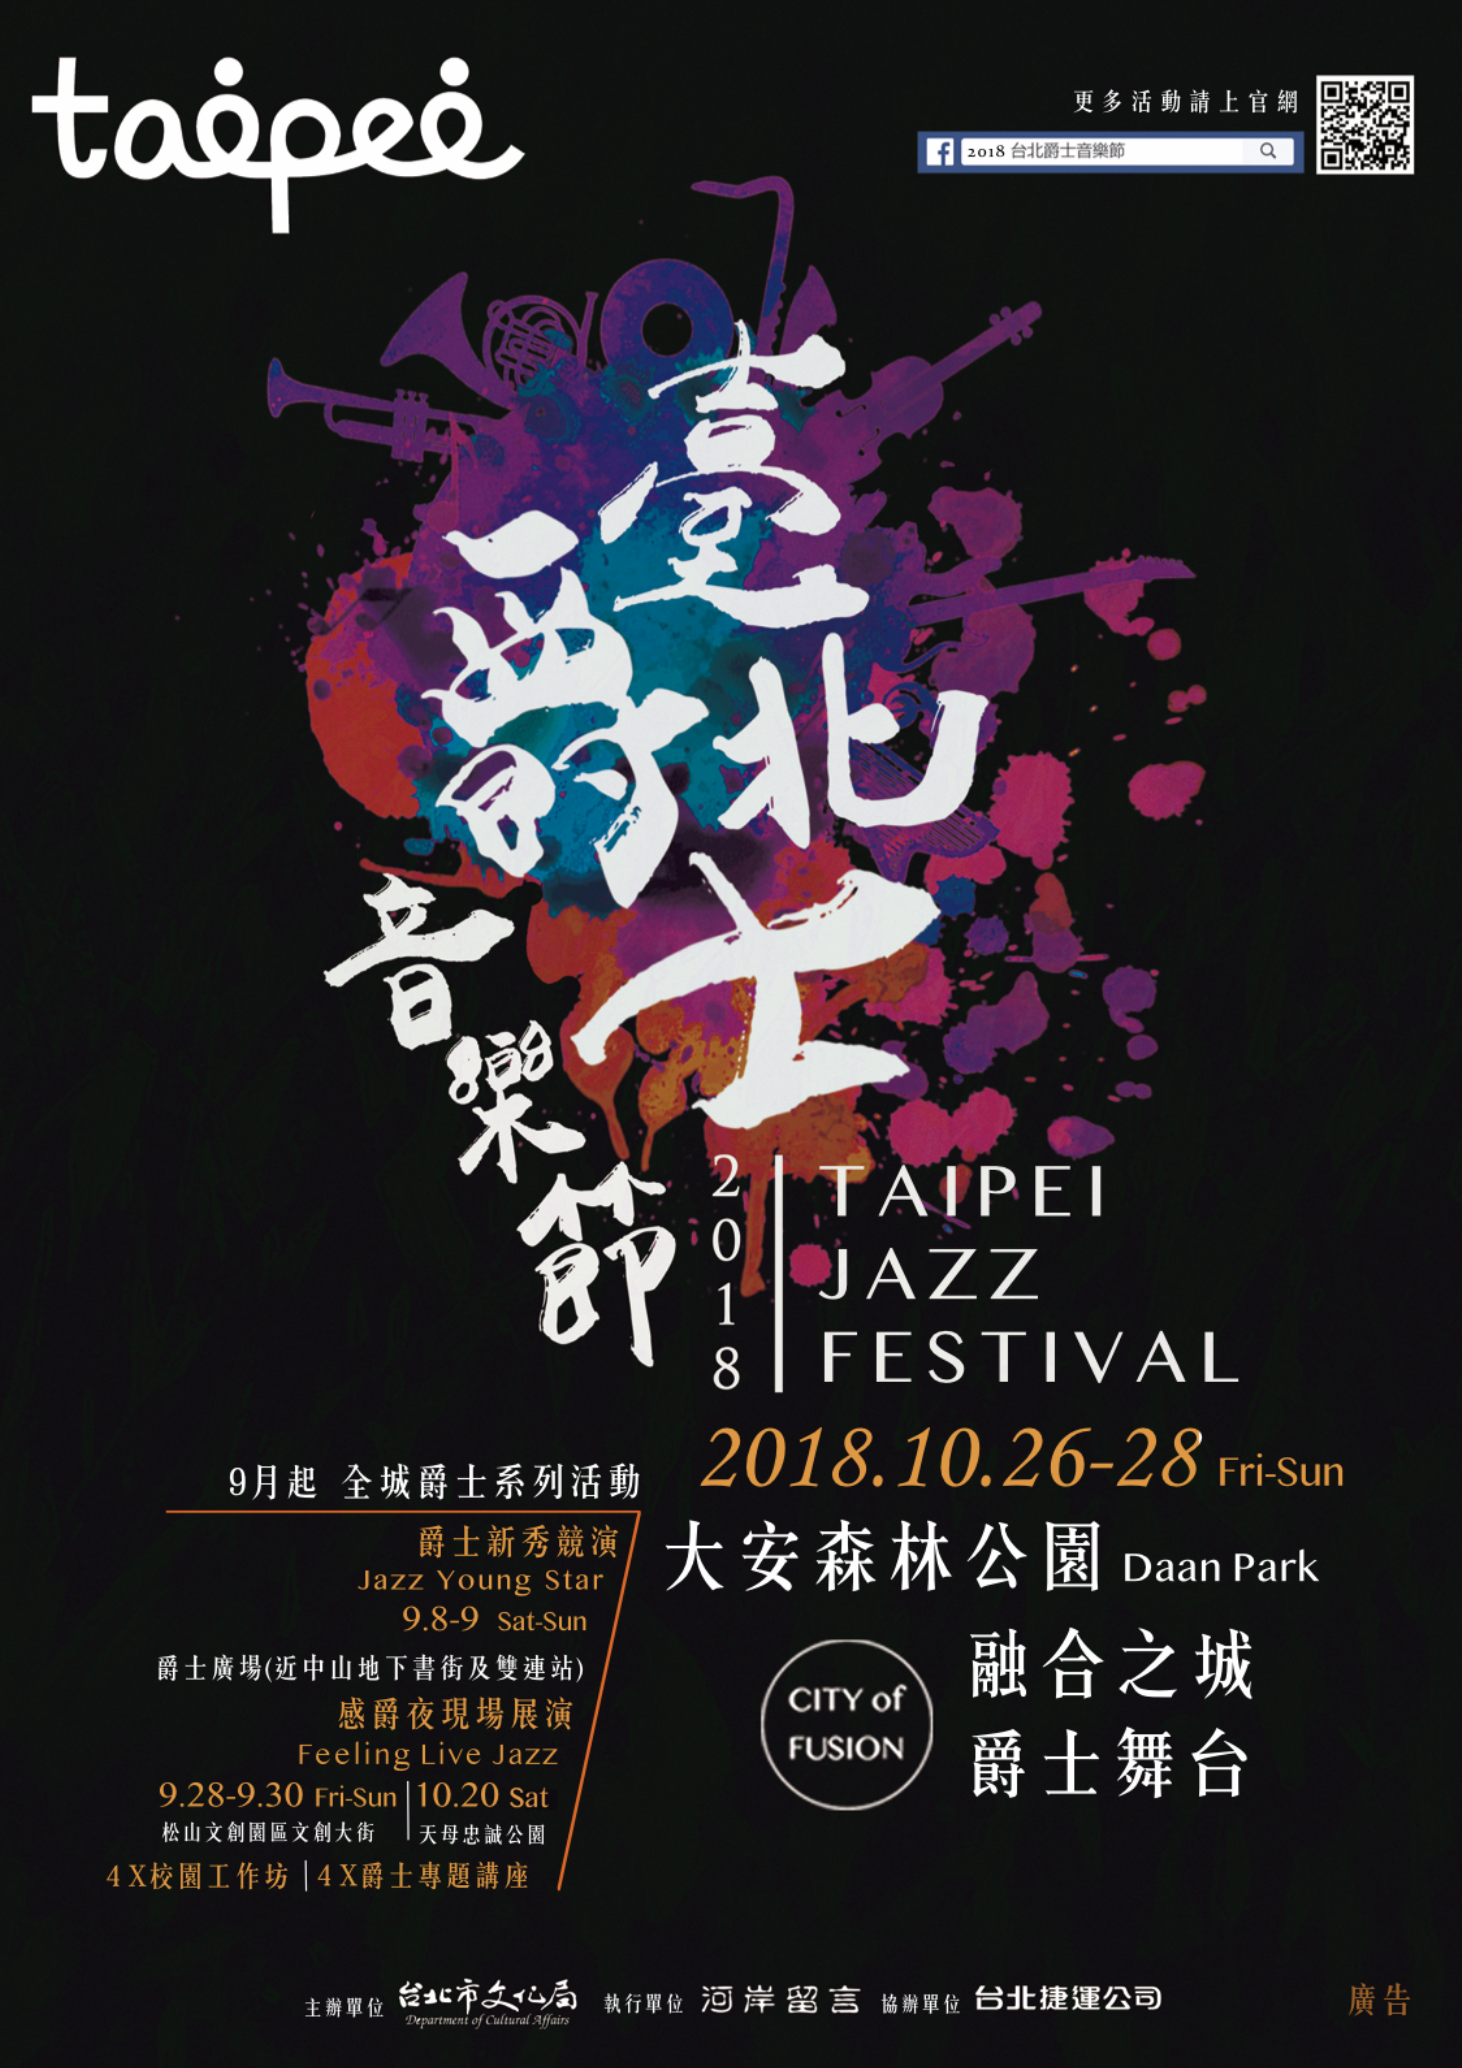 City of Fusion: The 2018 Taipei Jazz Music Festival